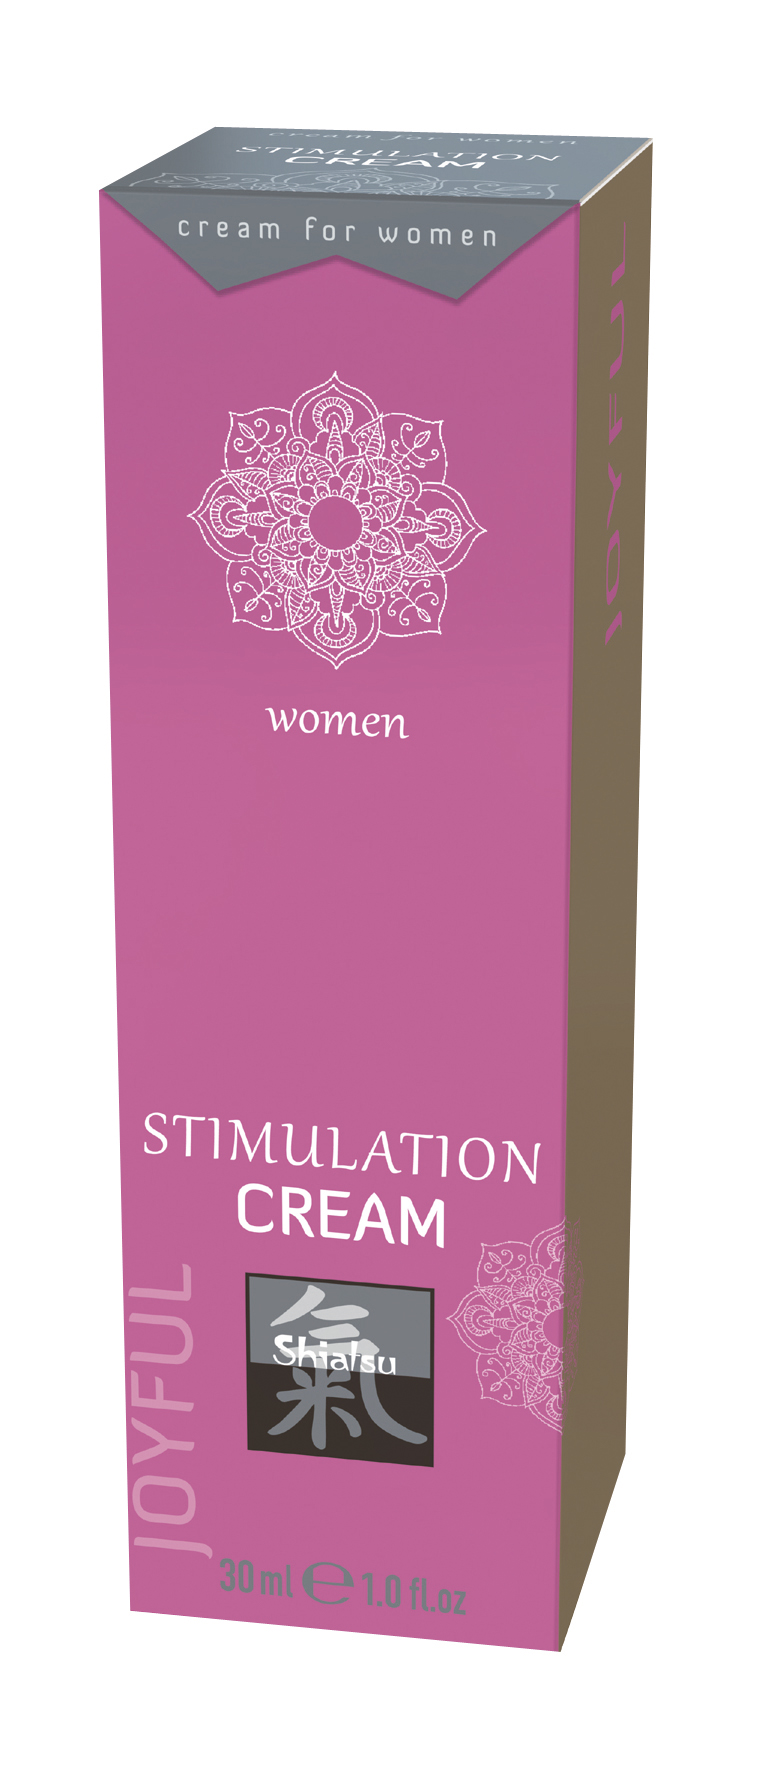 SHIATSU Stimulation Cream 30ml